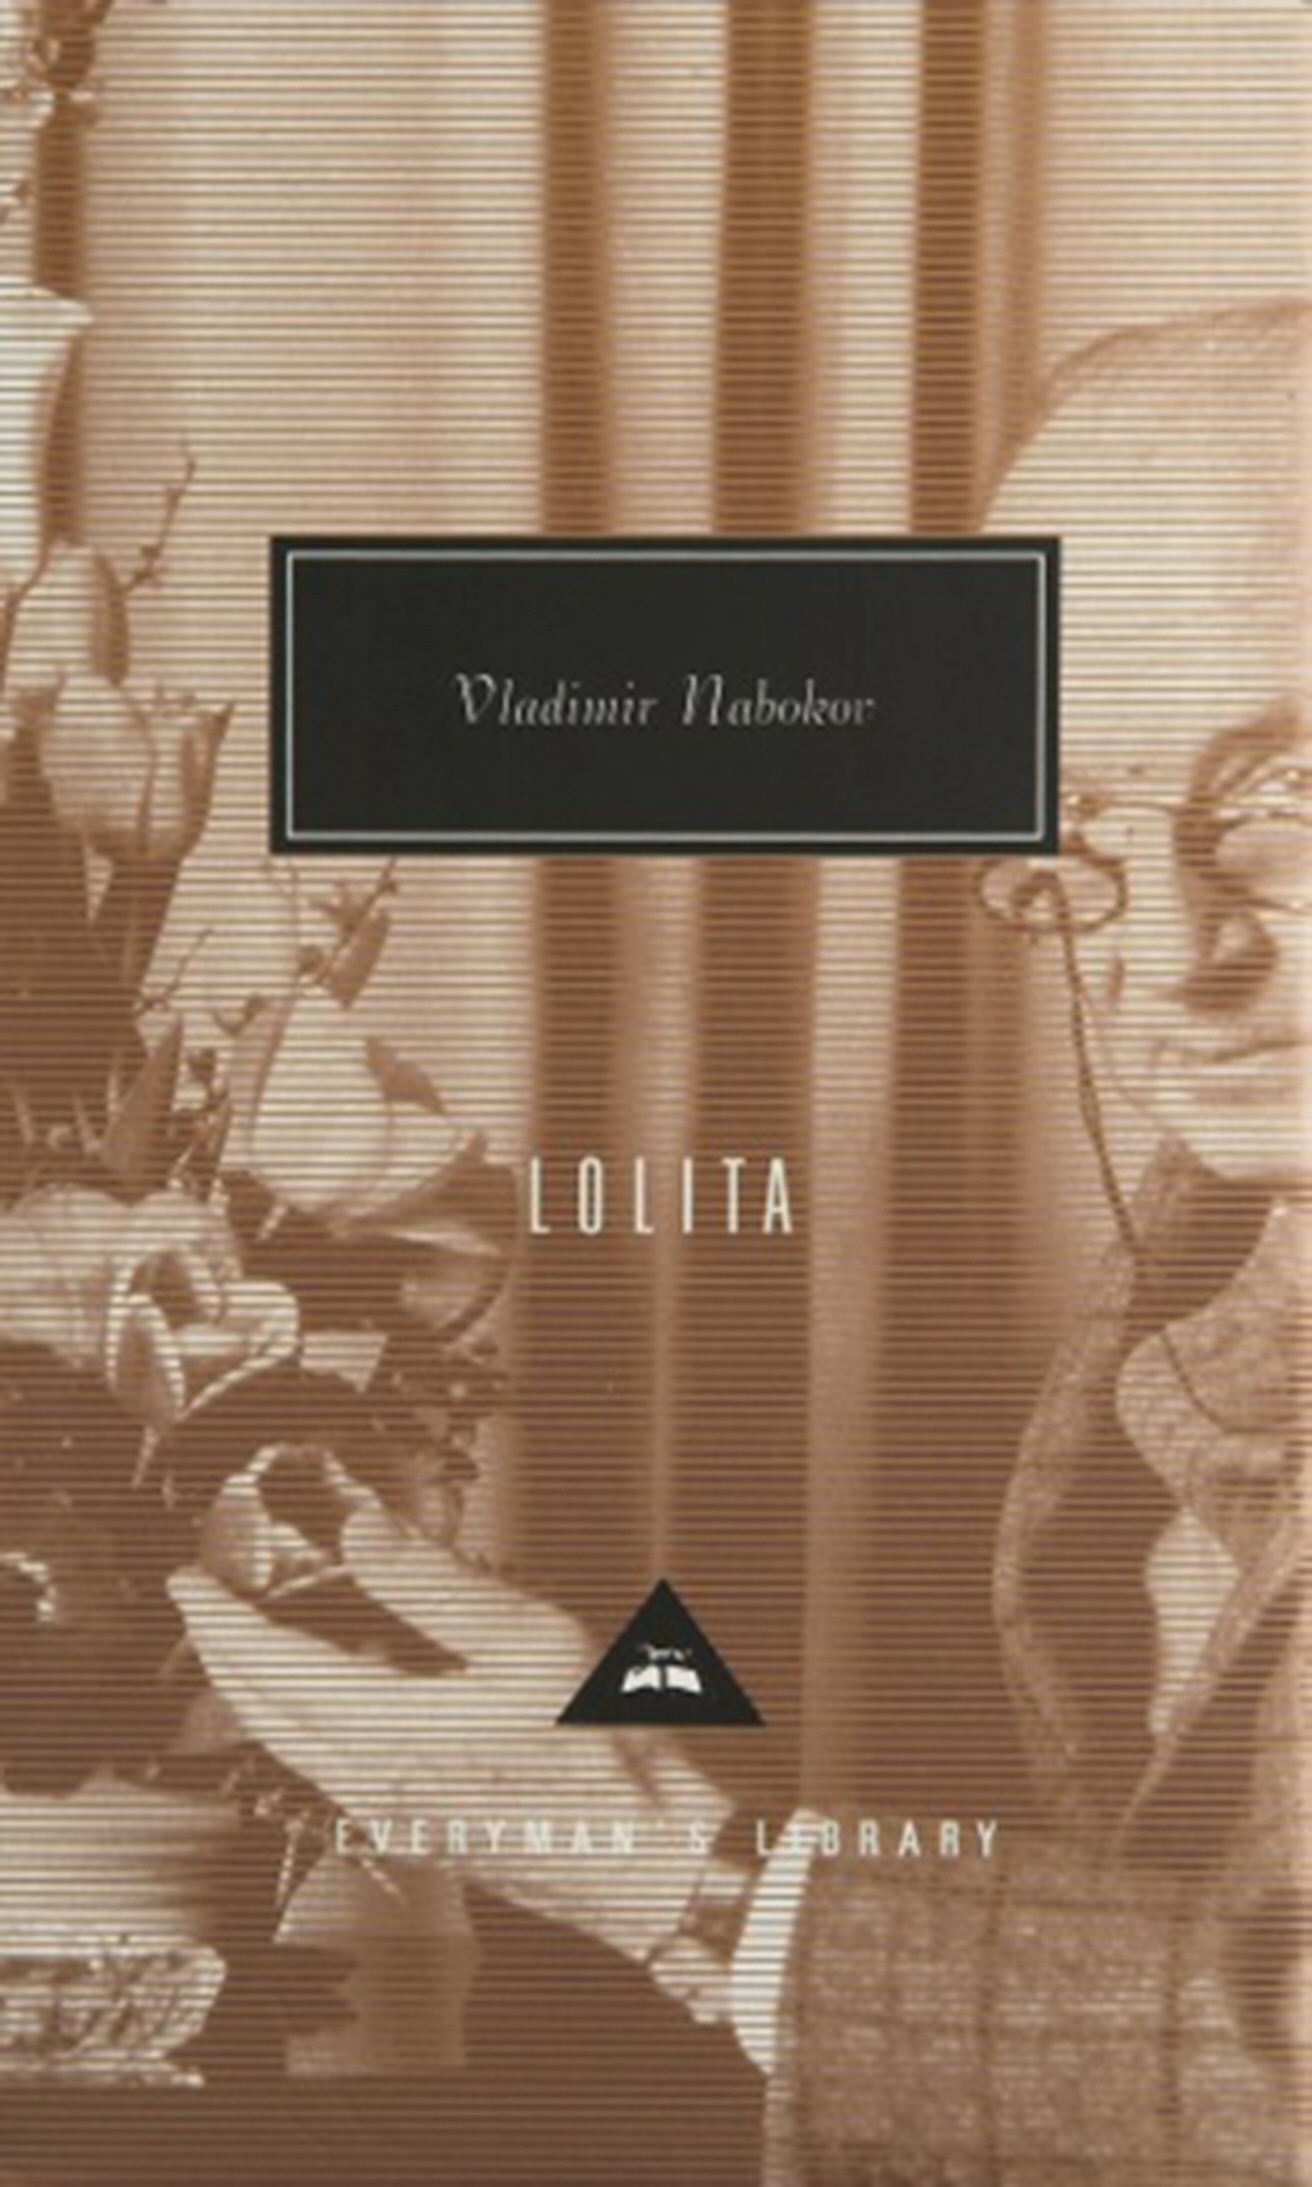 Book “Lolita” by Vladimir Nabokov — December 17, 1992